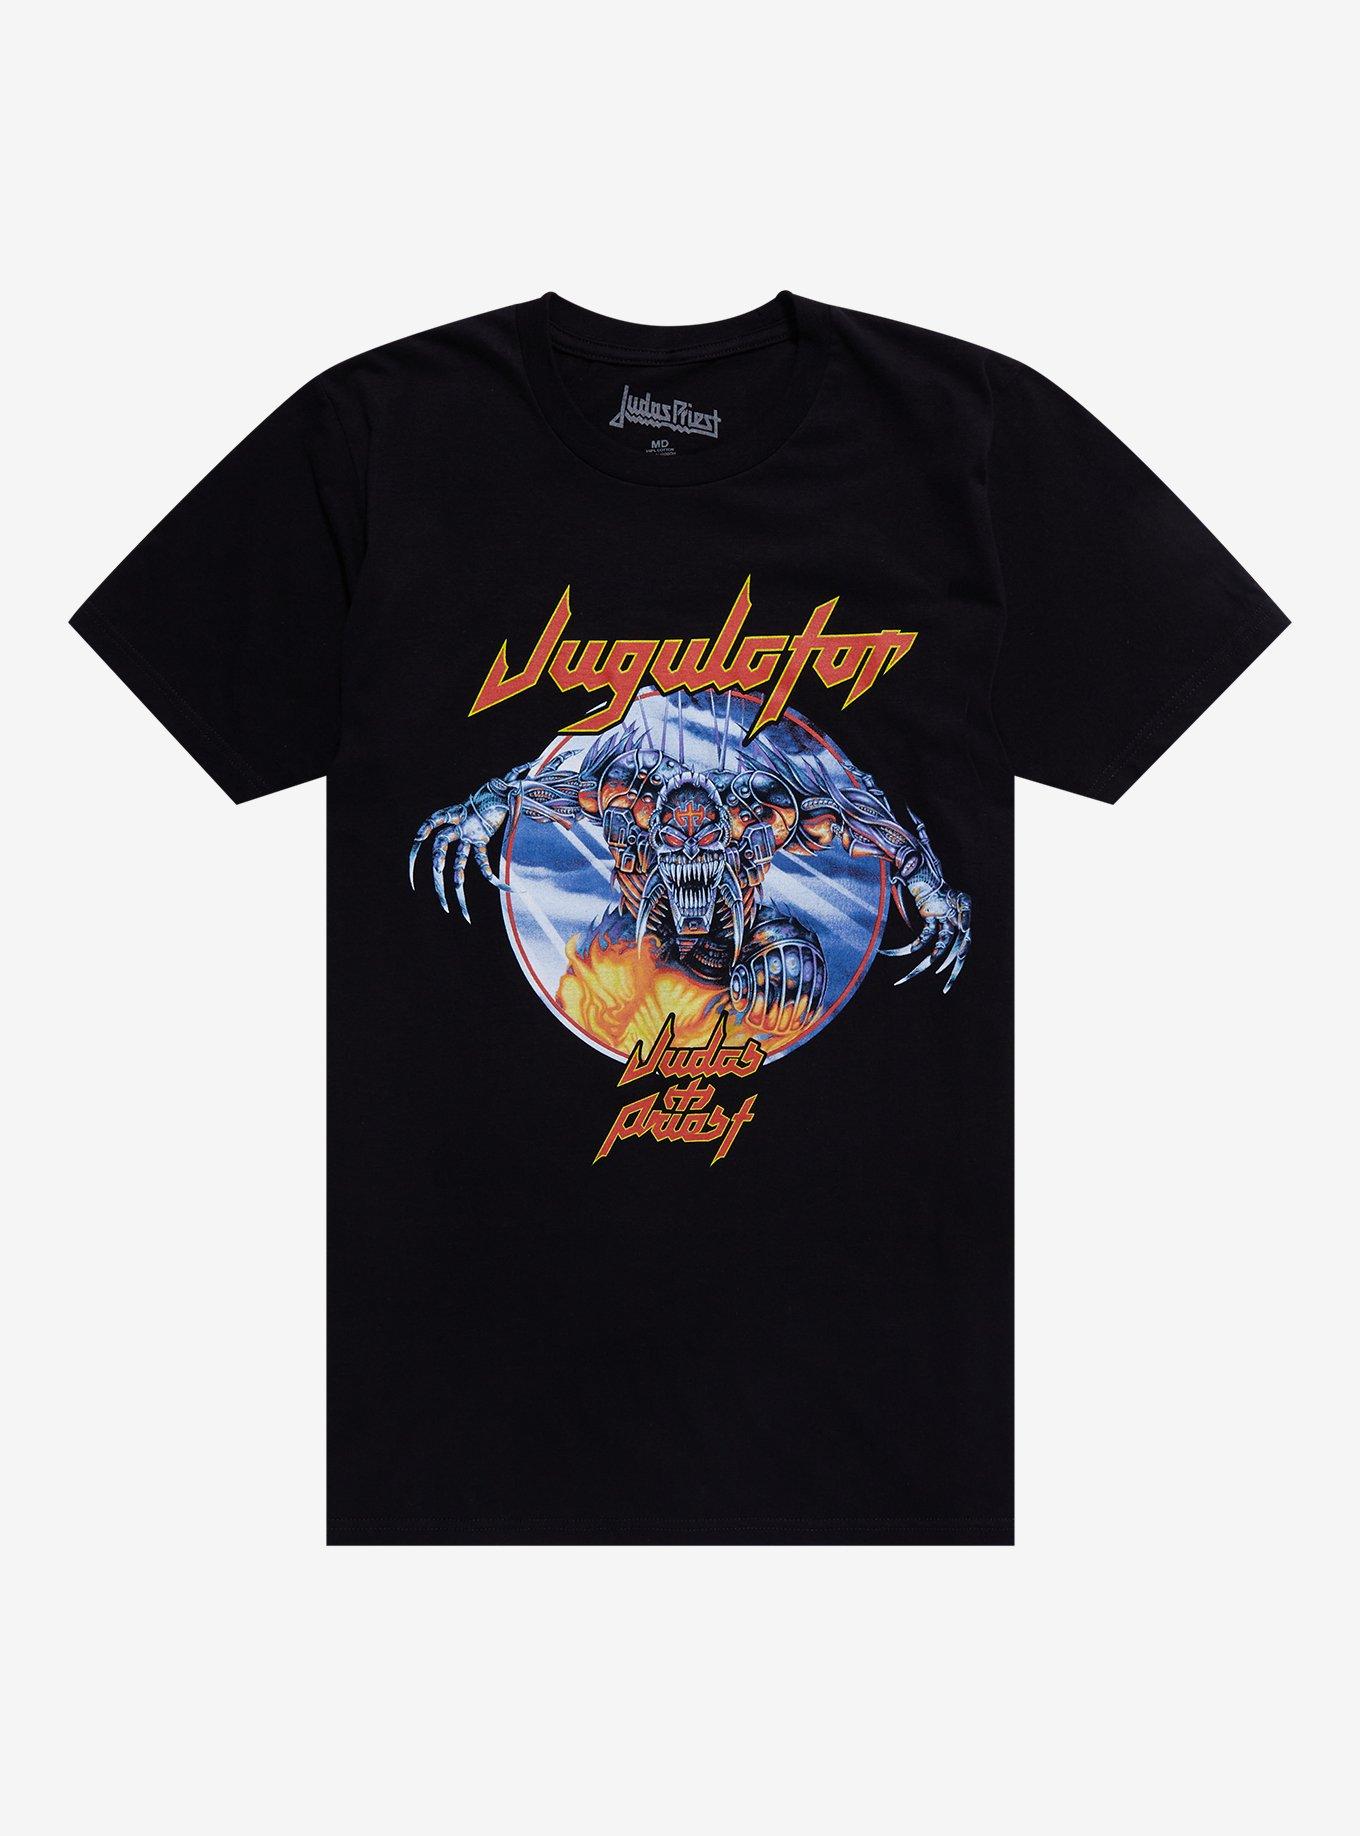 Judas Priest Jugulator Album Cover T-Shirt, BLACK, hi-res